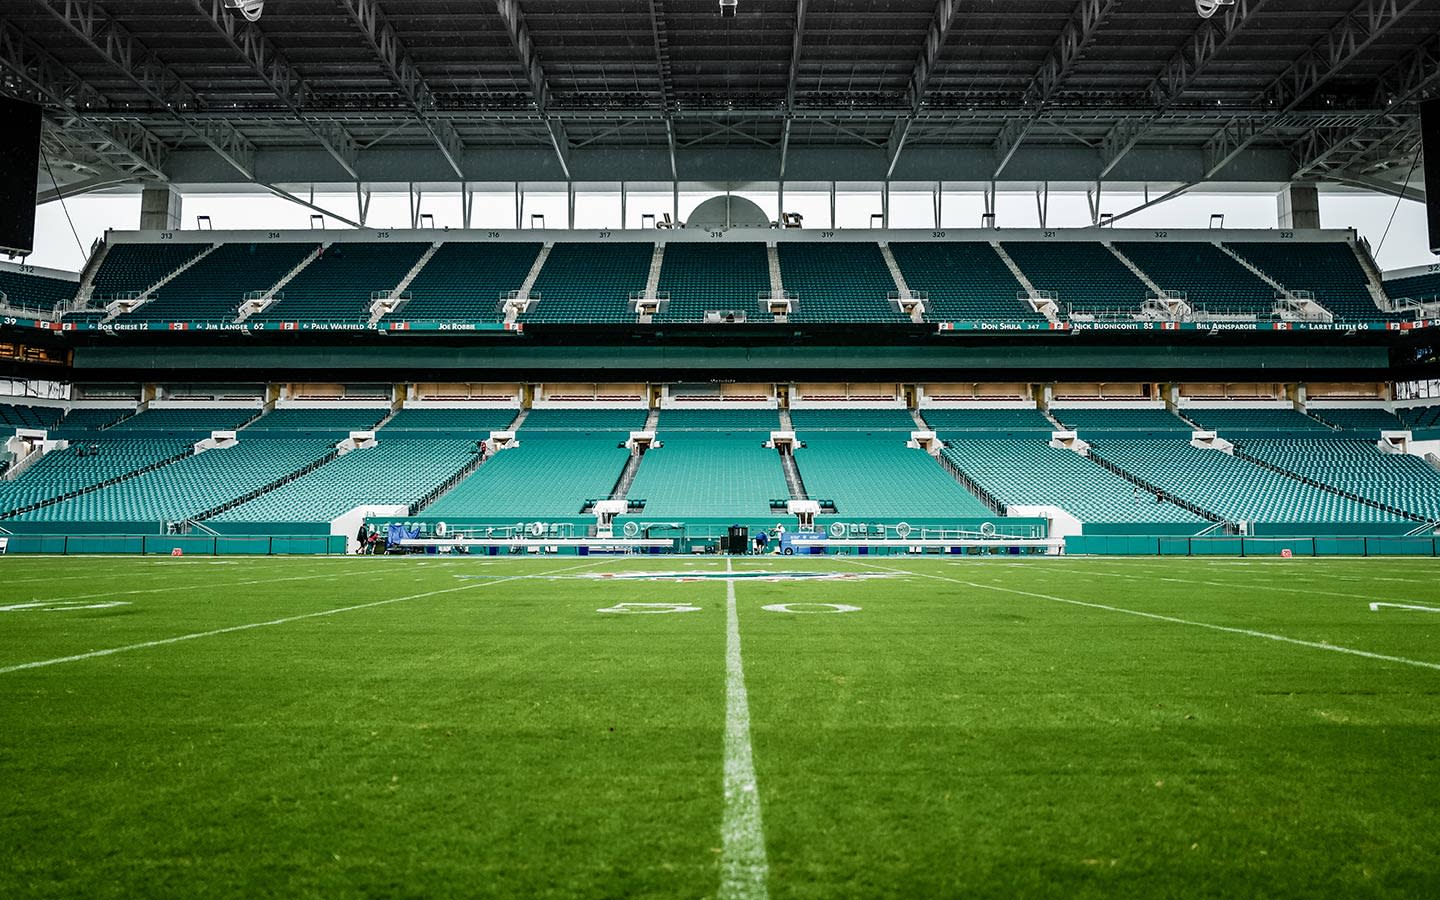 NFL: Miami Dolphins – Sun Life Stadium – The Future of Football